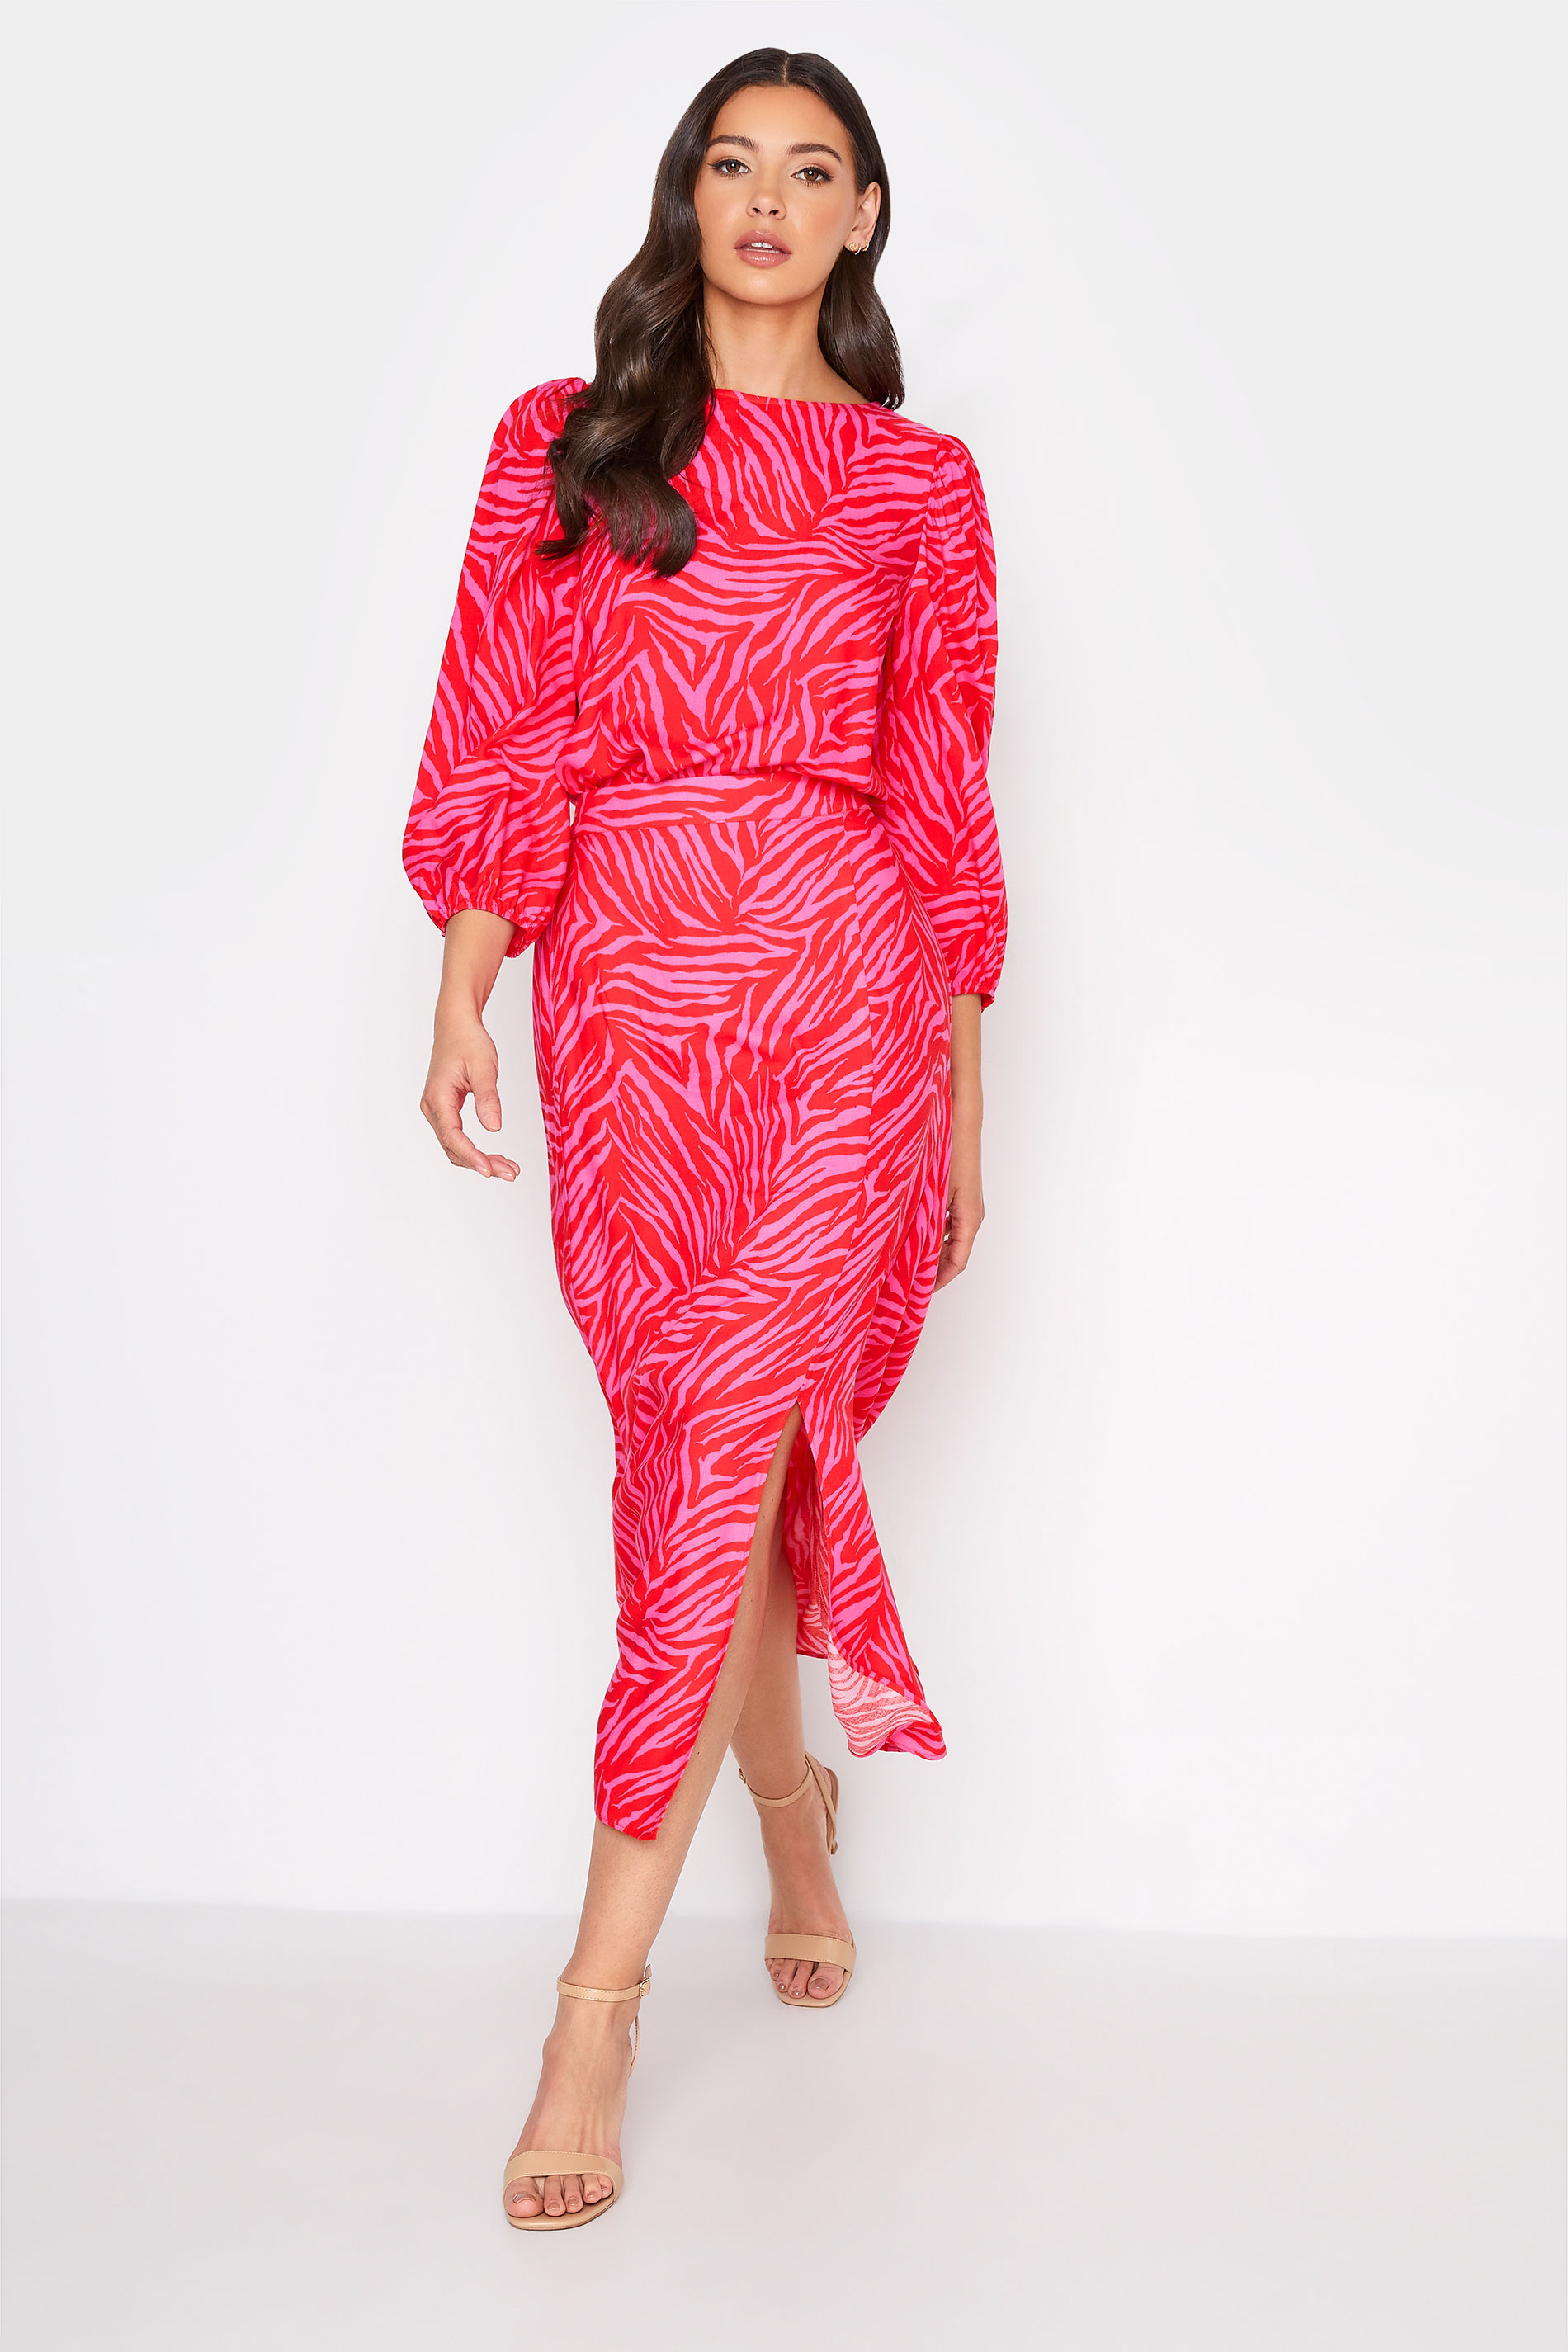 Tall Women's LTS Bright Pink Zebra Print Puff Sleeve Top | Long Tall Sally 3